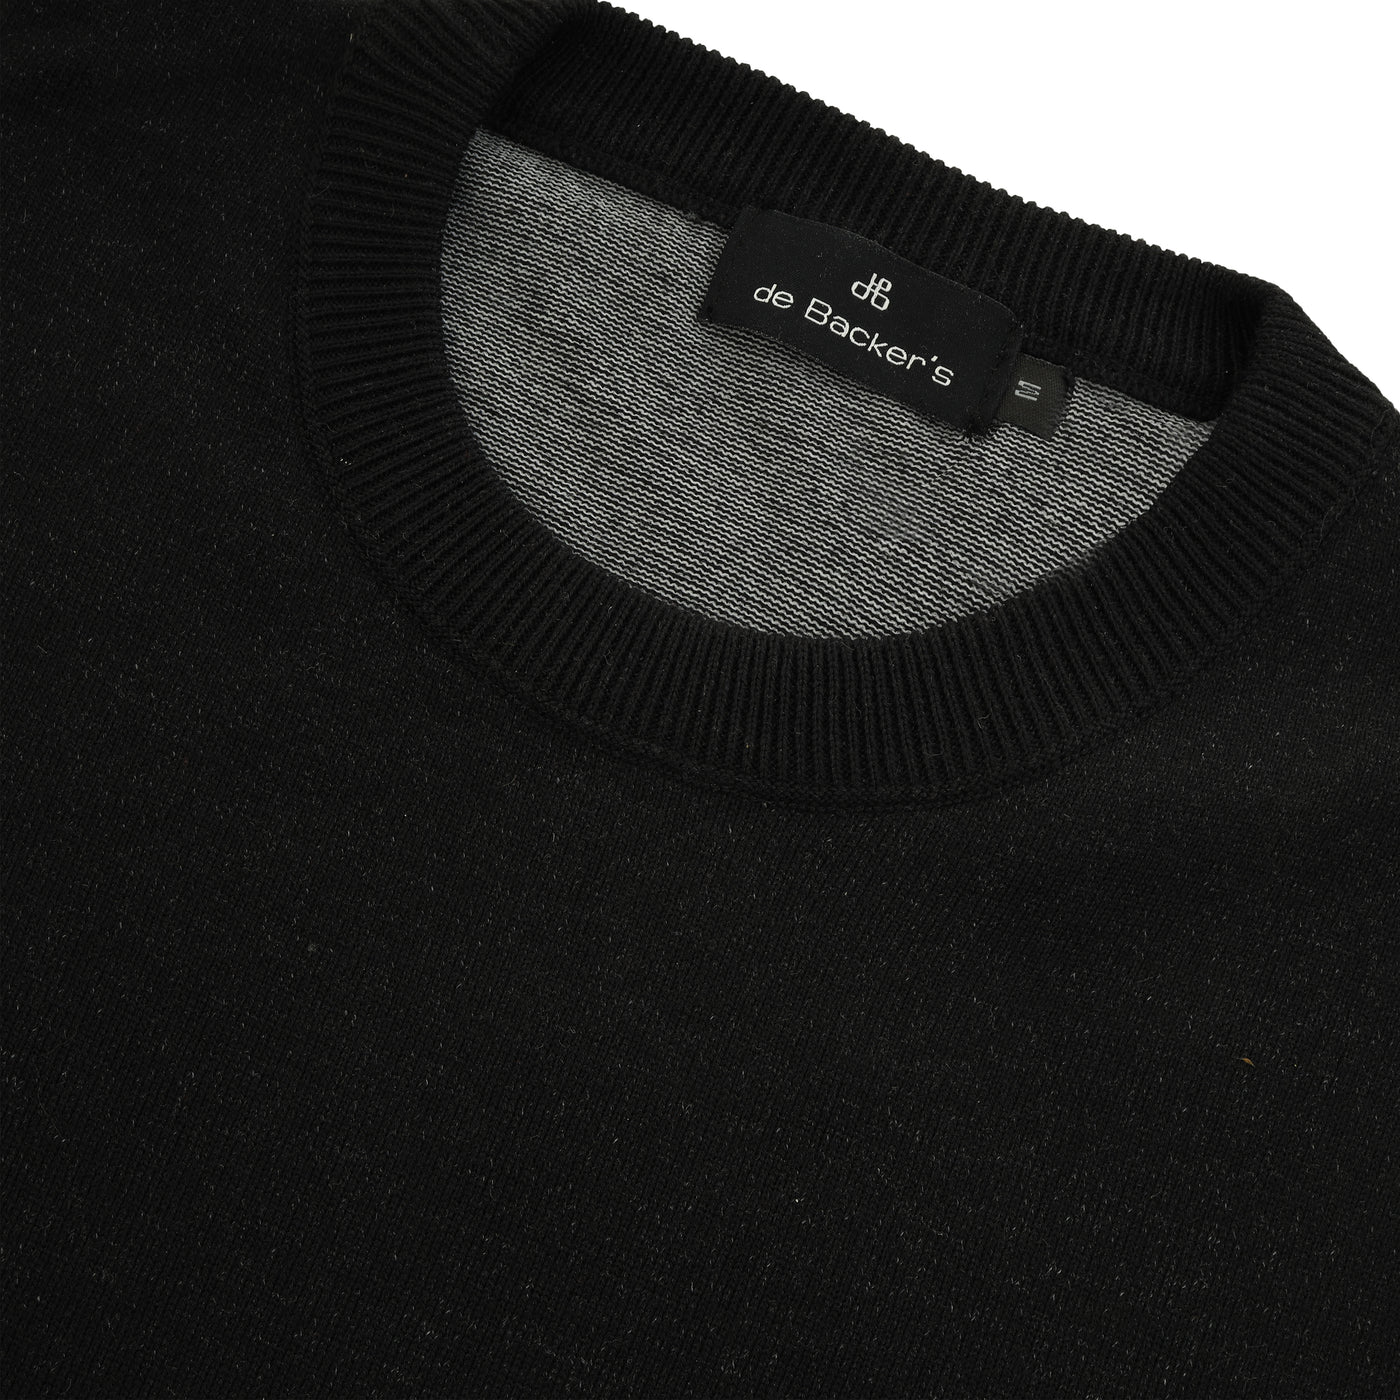 Plain Black  Knitted  Round T Shirt